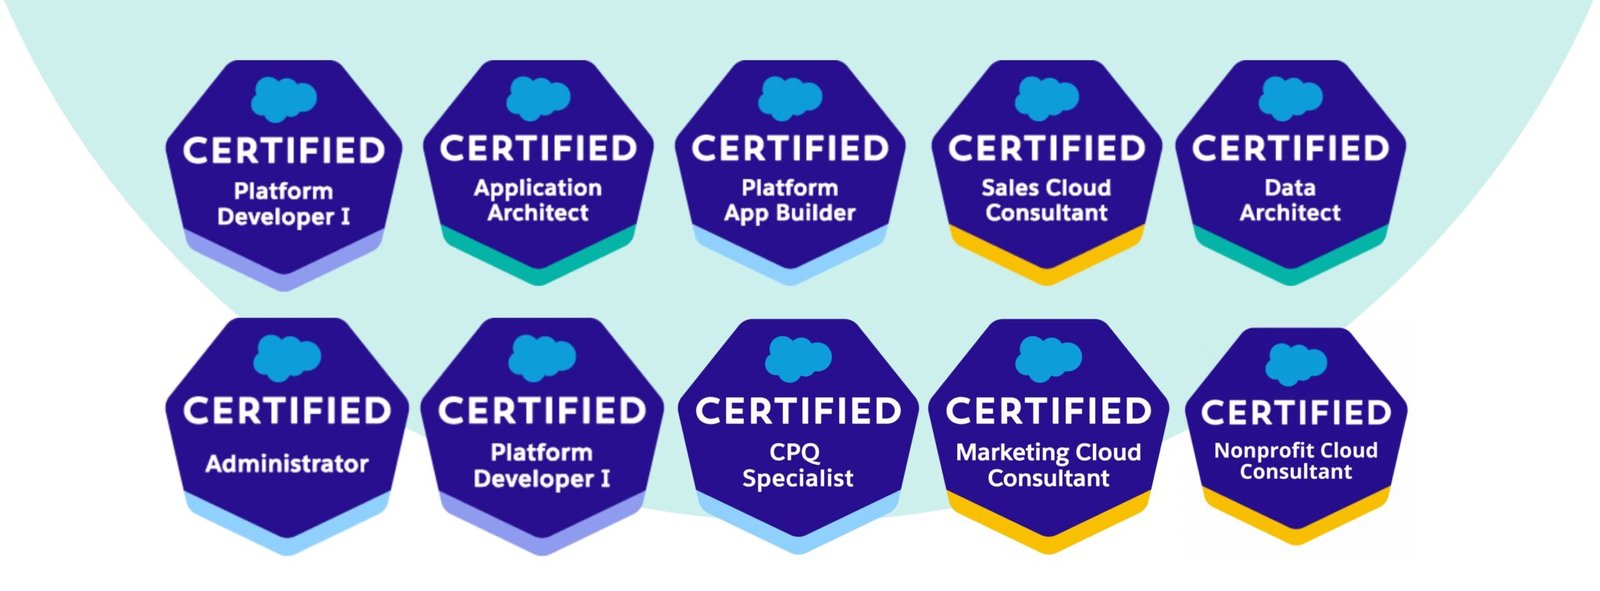 Salesforce Partner - Certified Experts